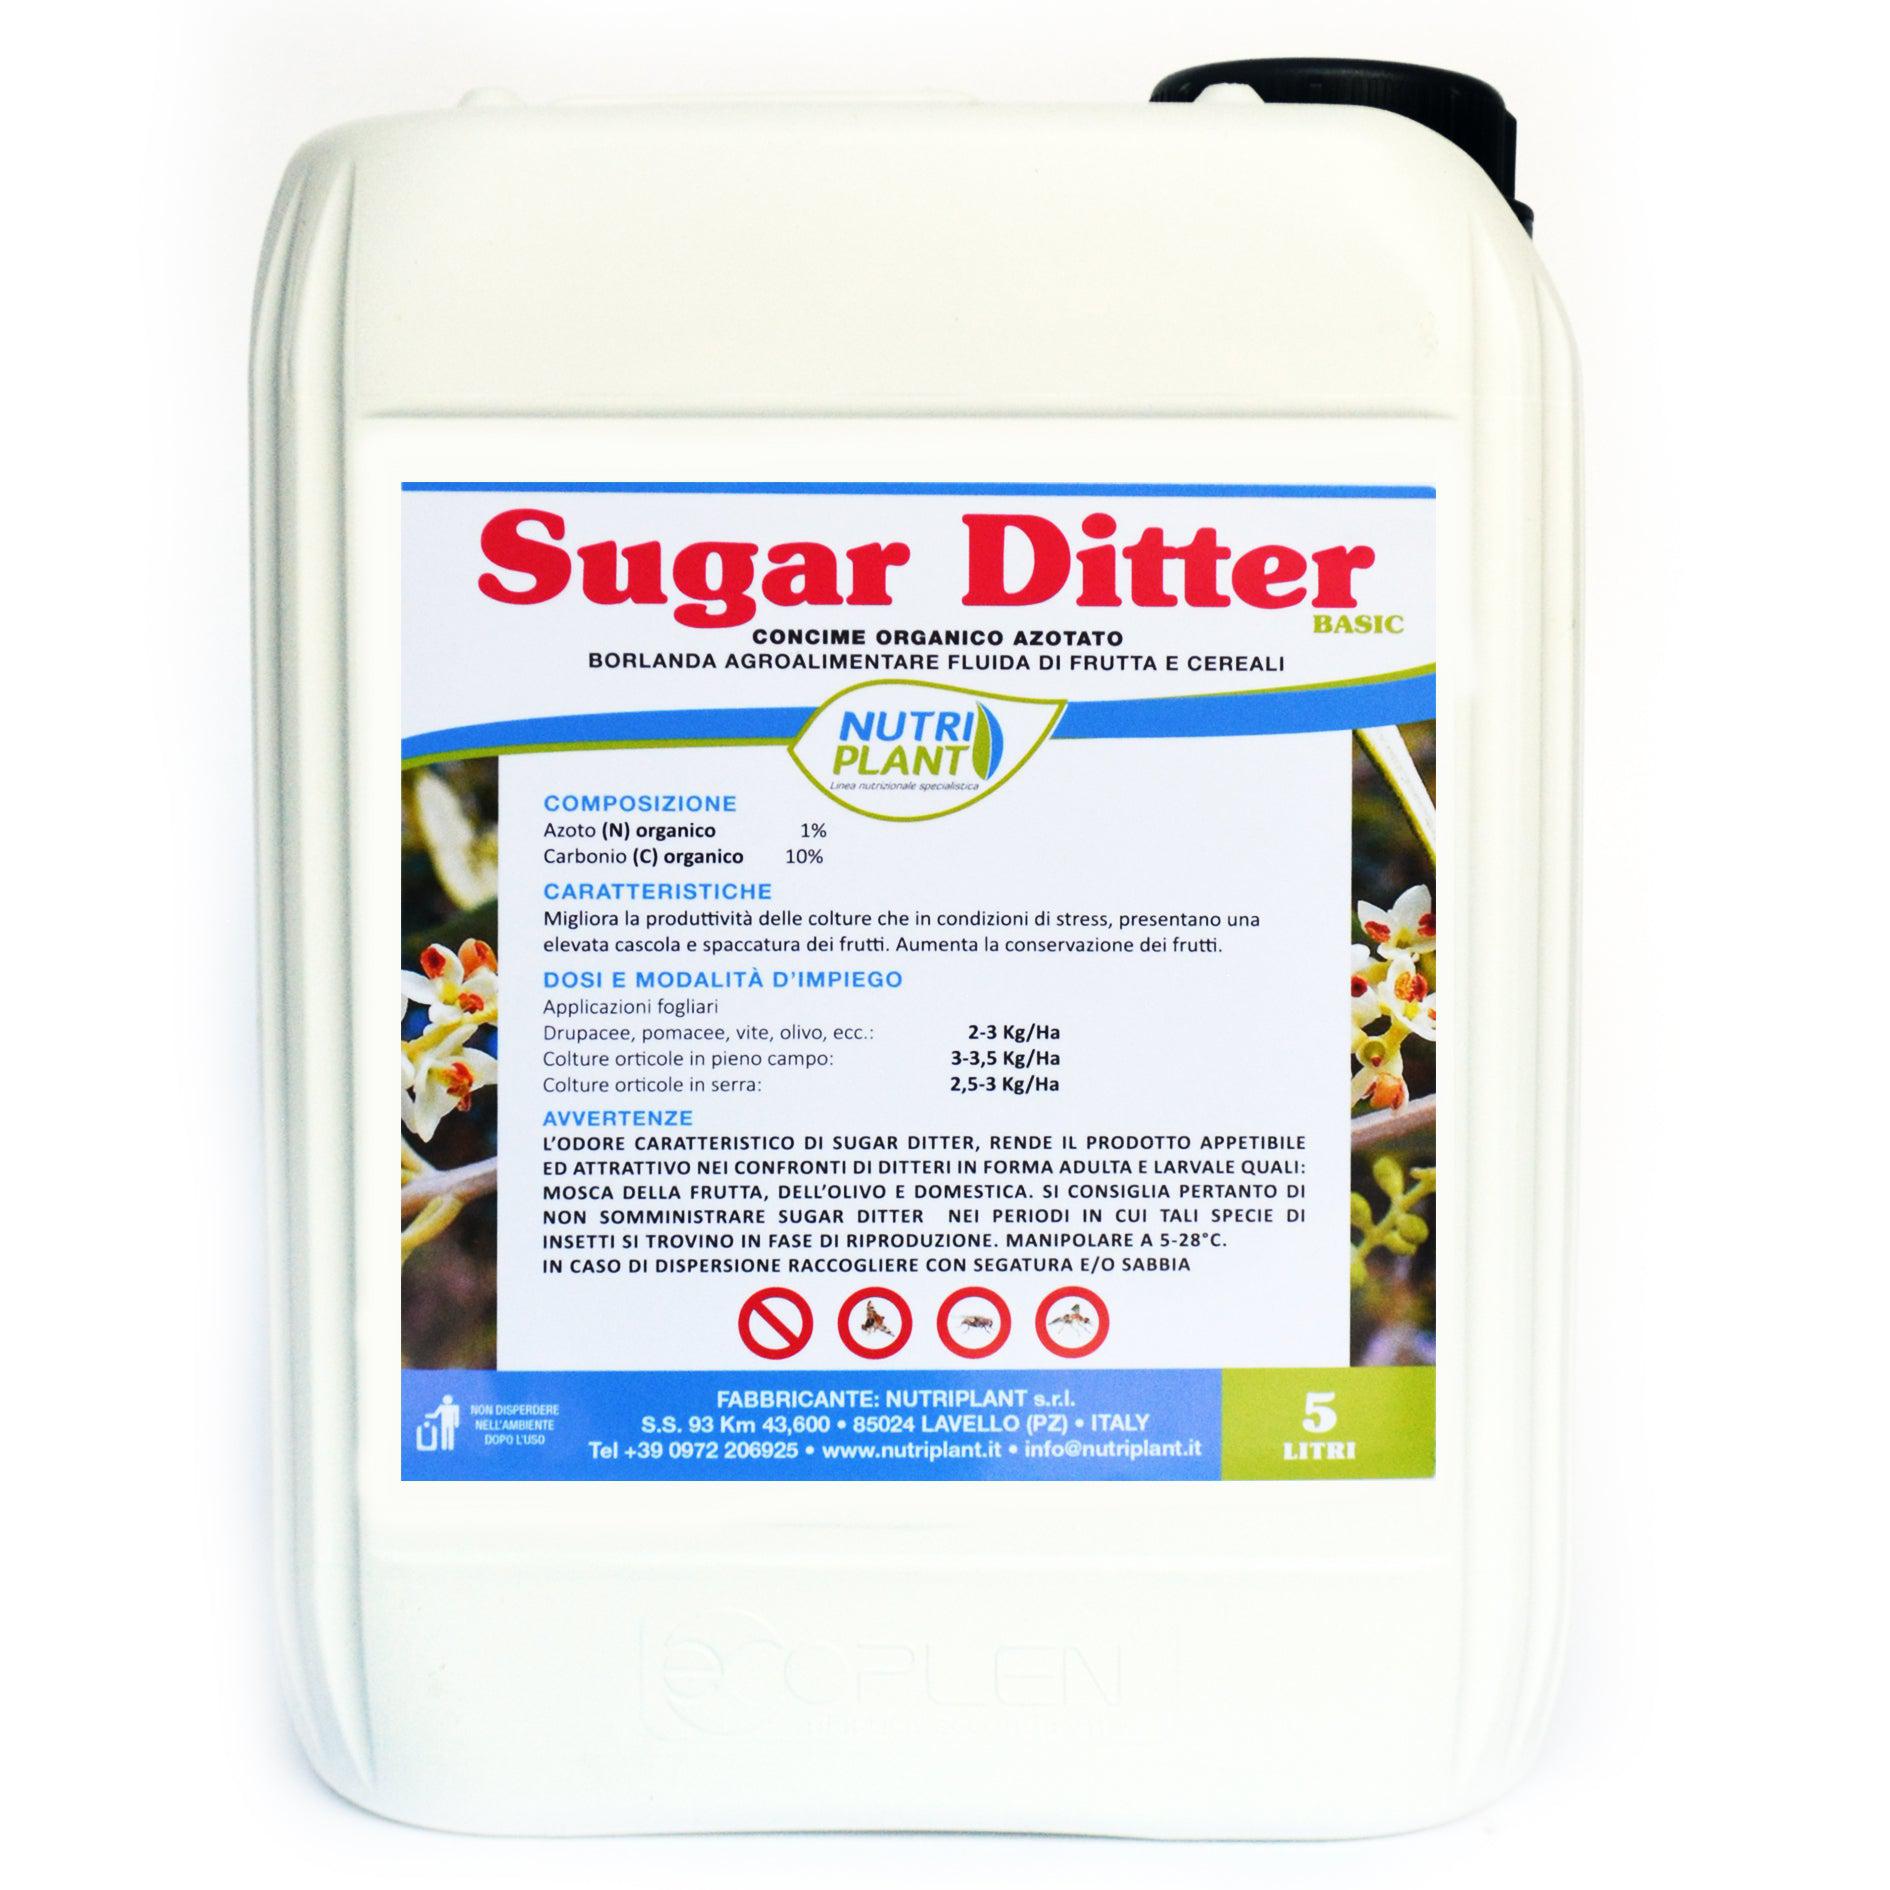 Sugar Ditter concime organico borlanda fluida-Ecanshop